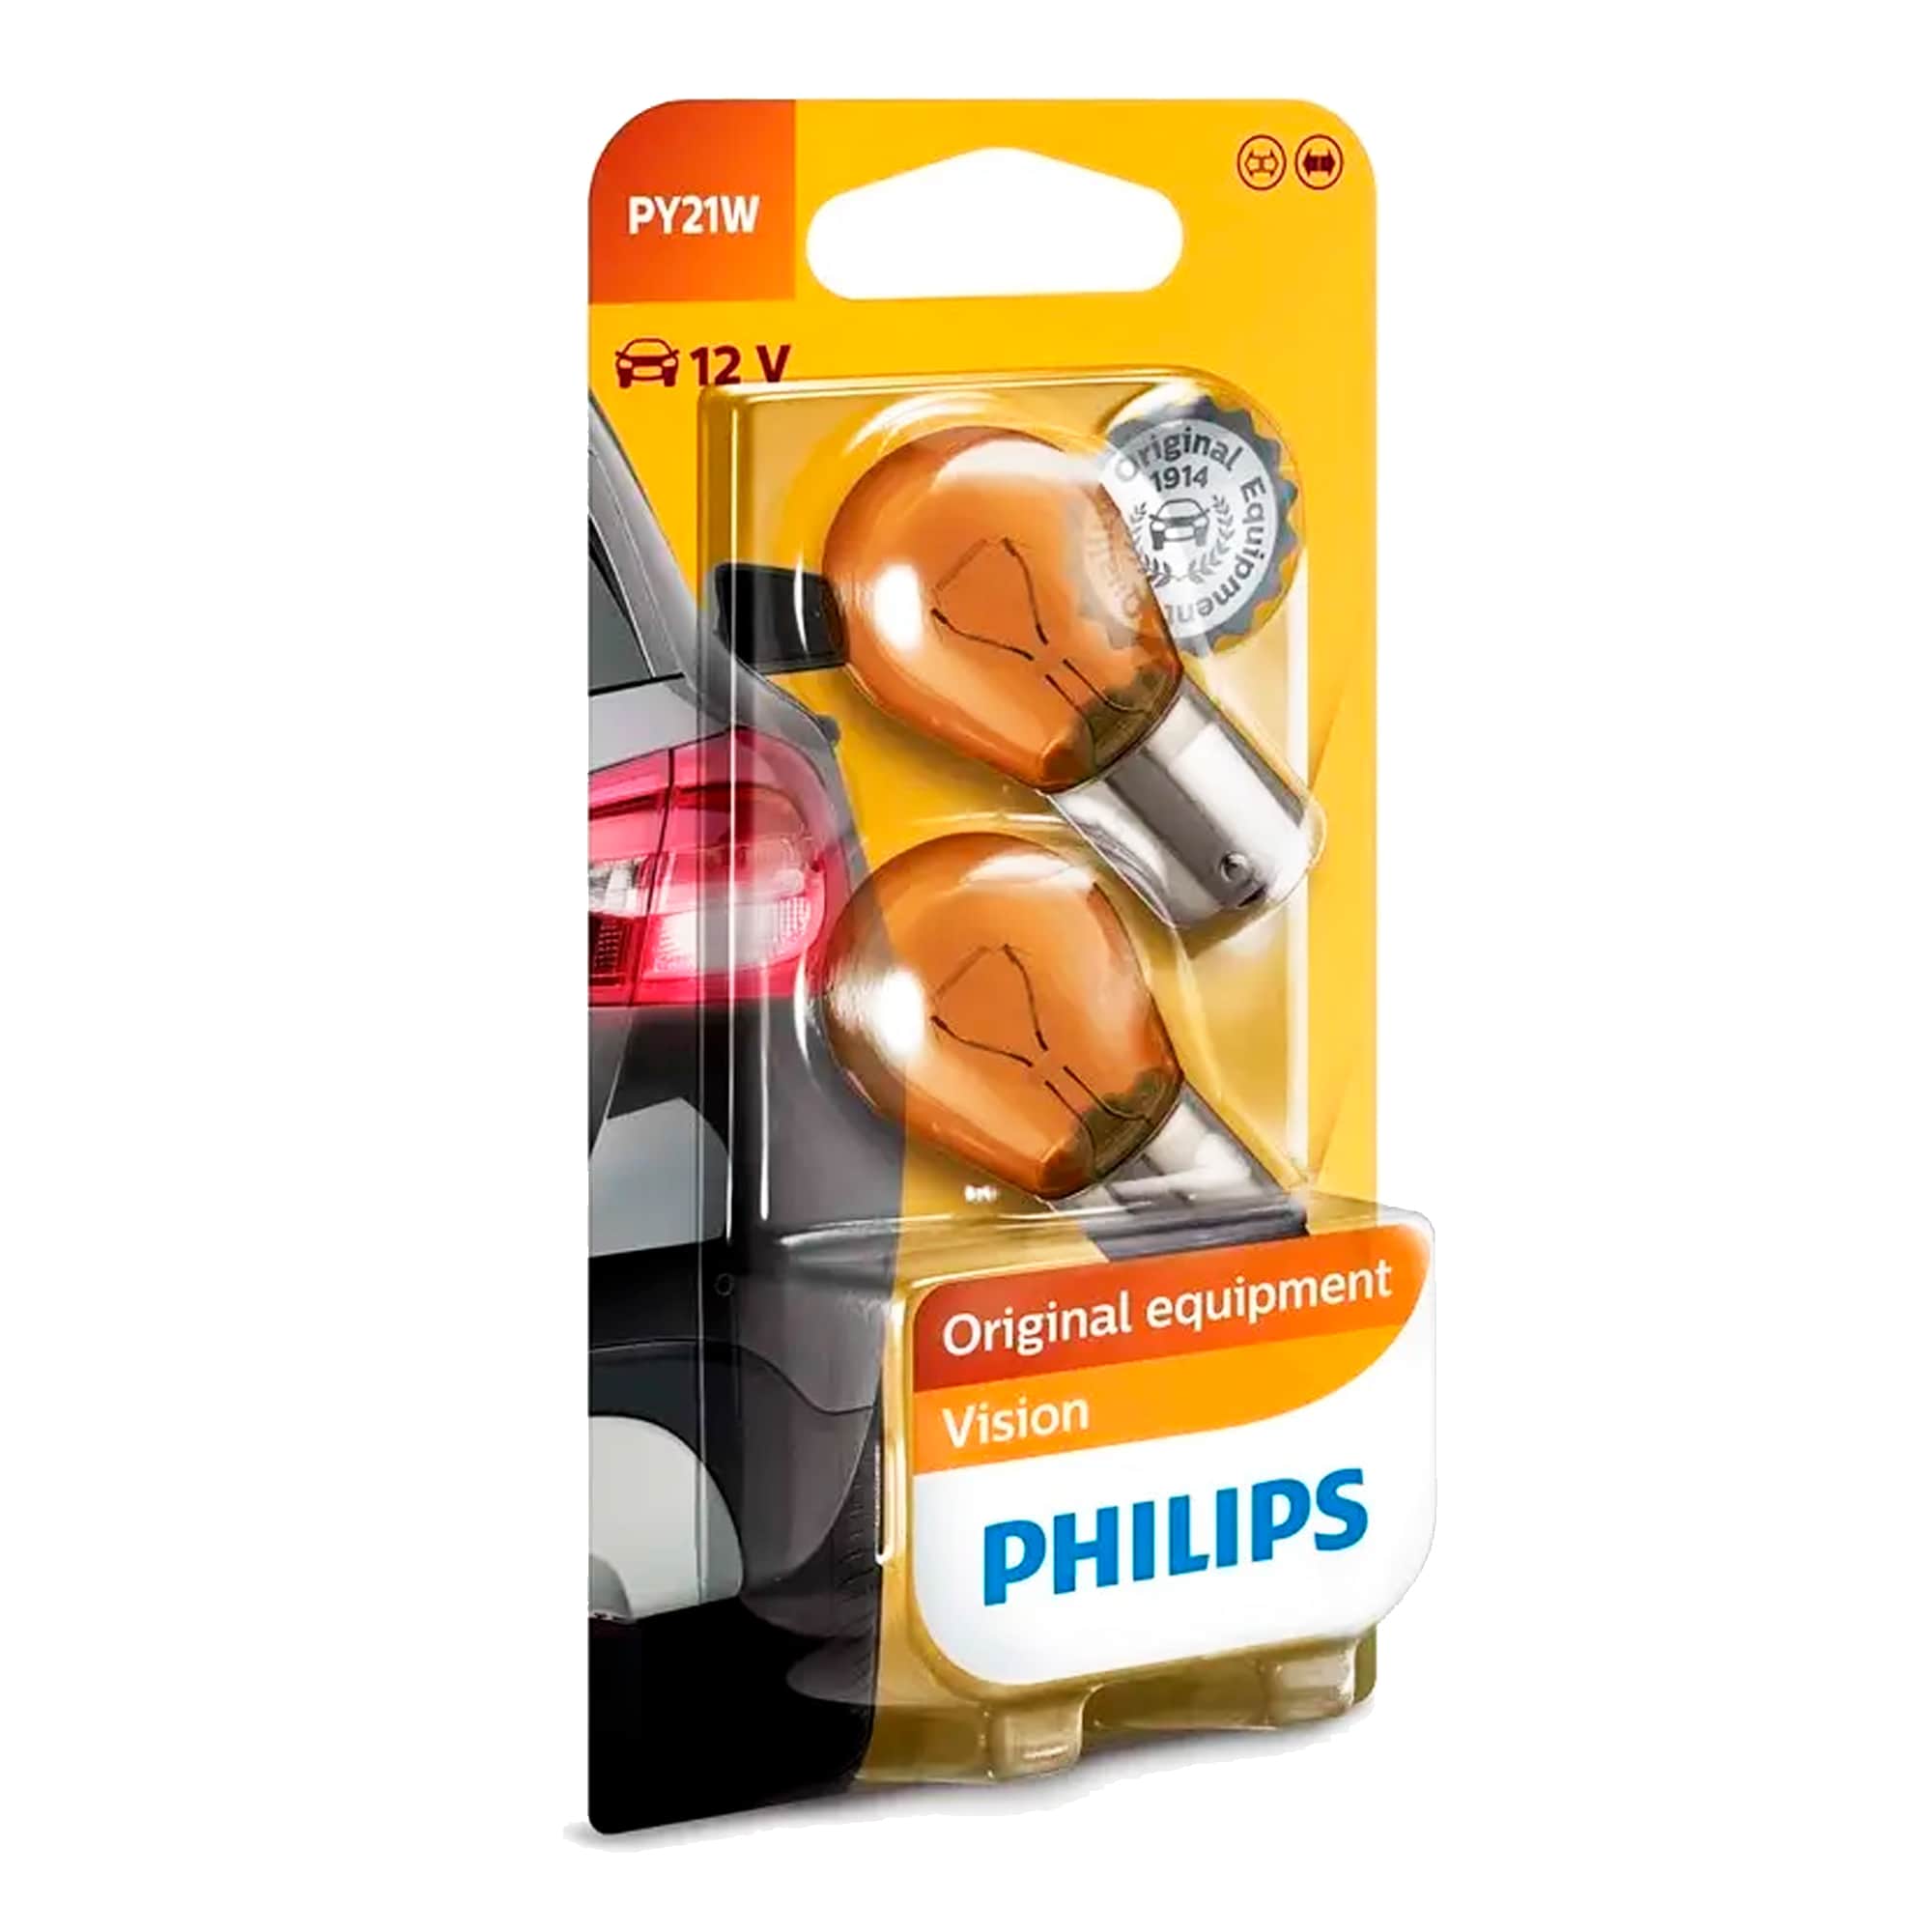 Лампа Philips Vision PY21W 12V 21W 12496 NA B2